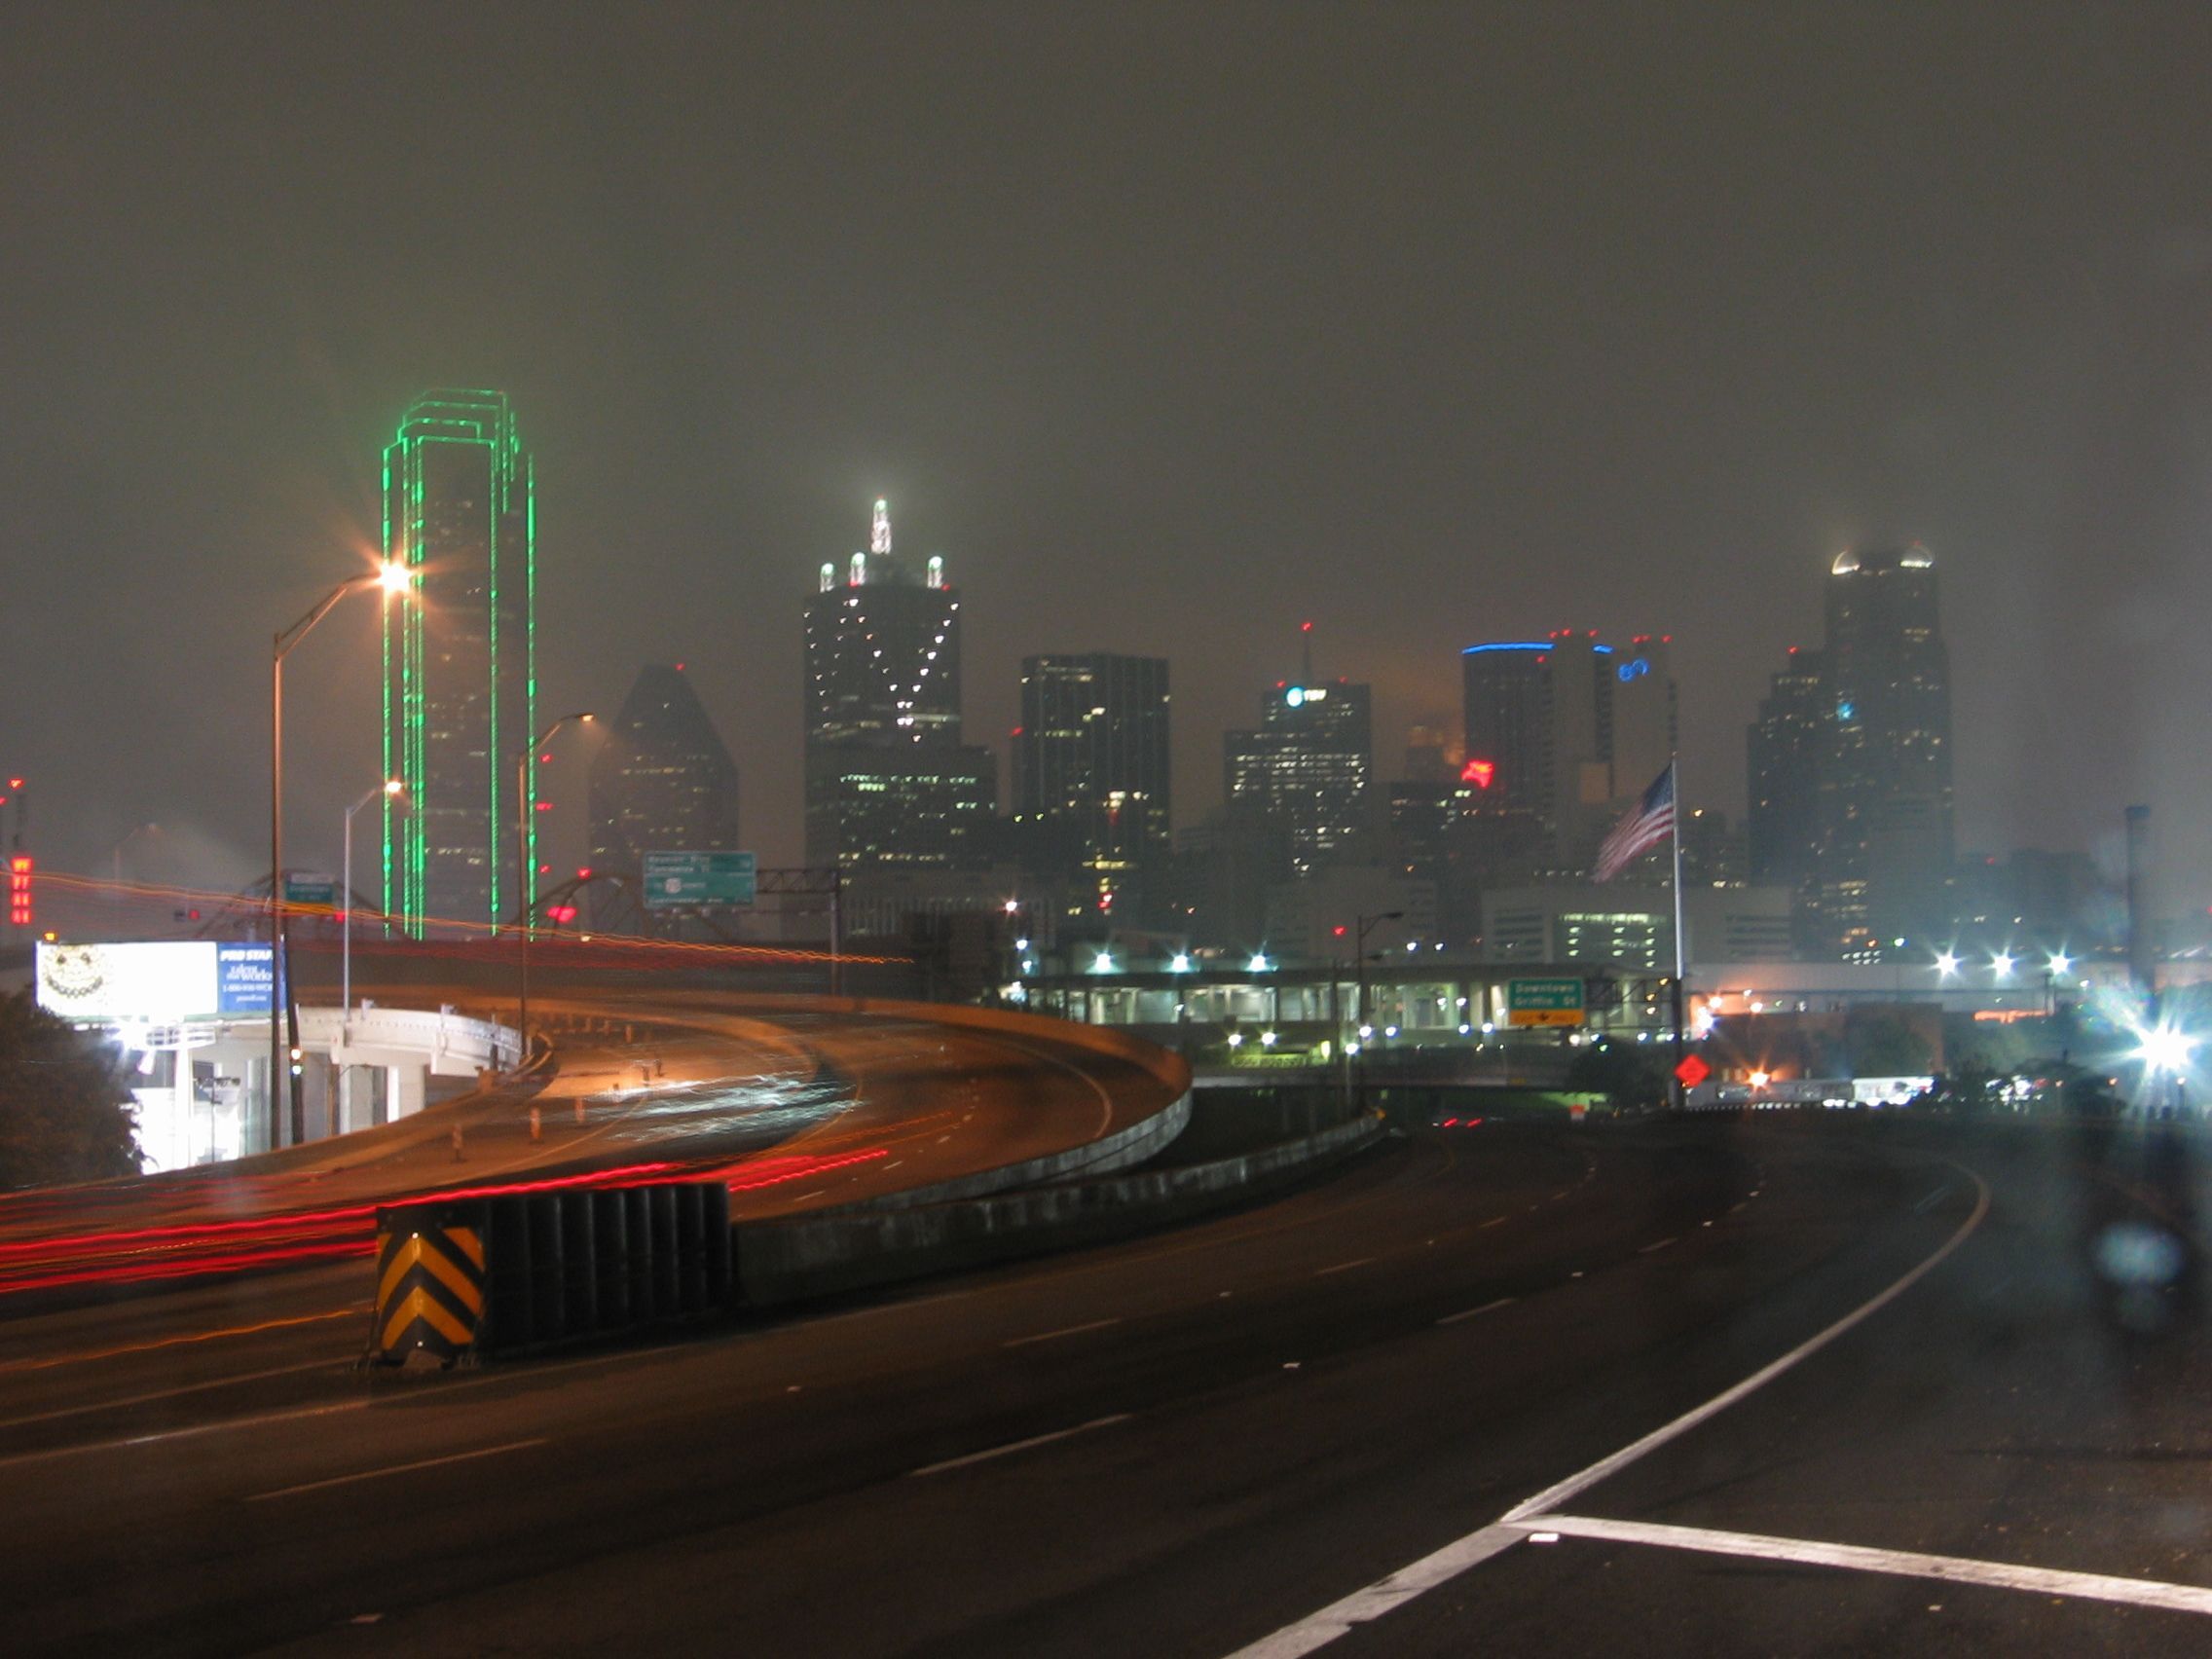 File:Dallas tx foggy night.jpg - Wikimedia Commons